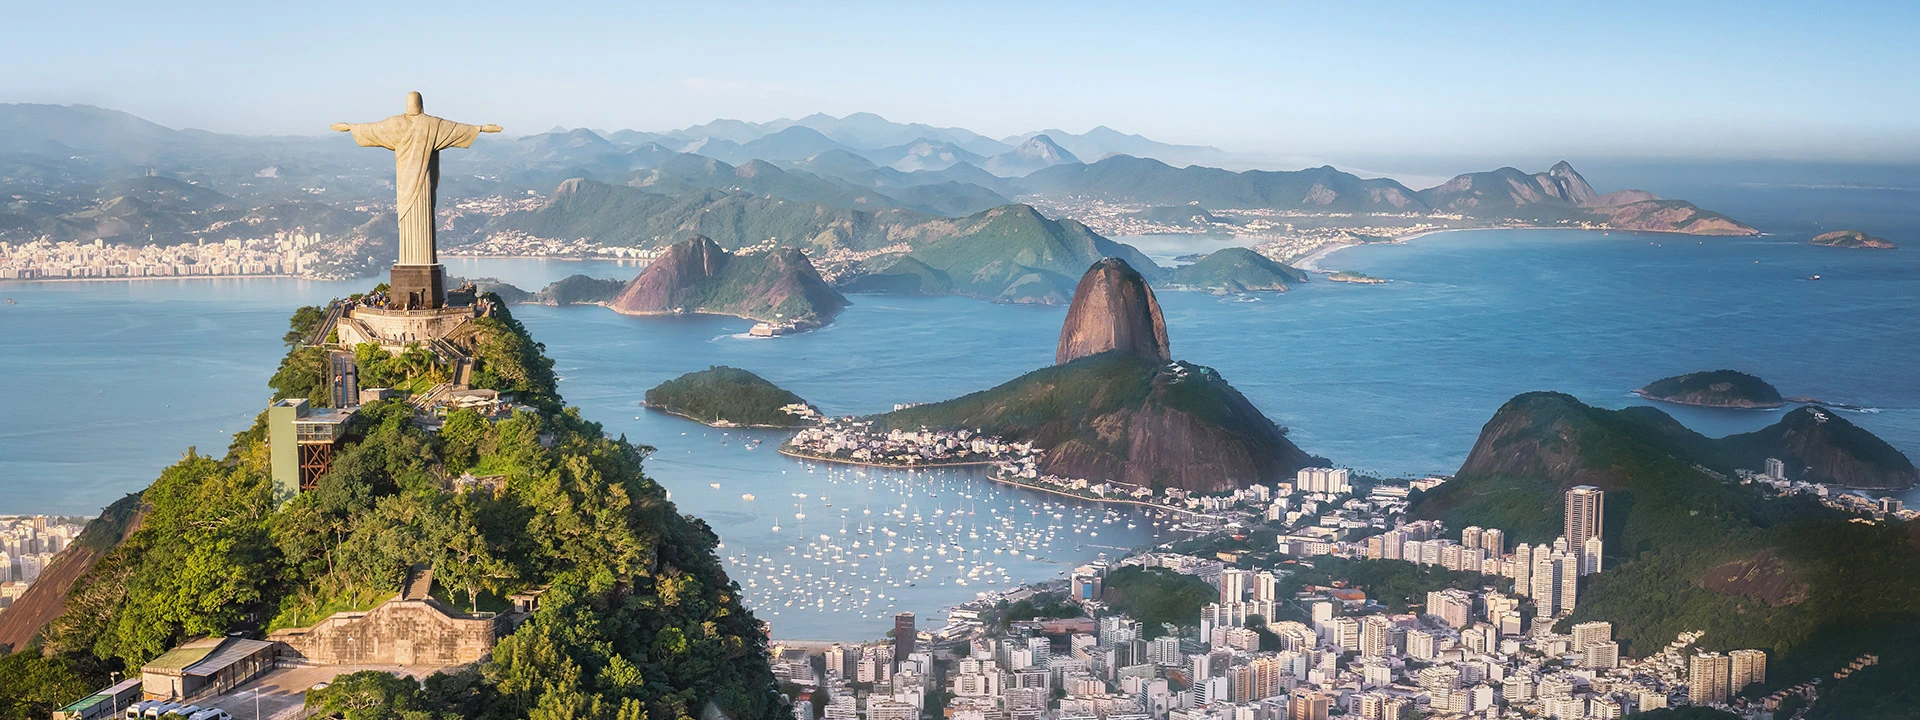 Christ The Redeemer and Rio de Janeiro Brazil on a South America cruise